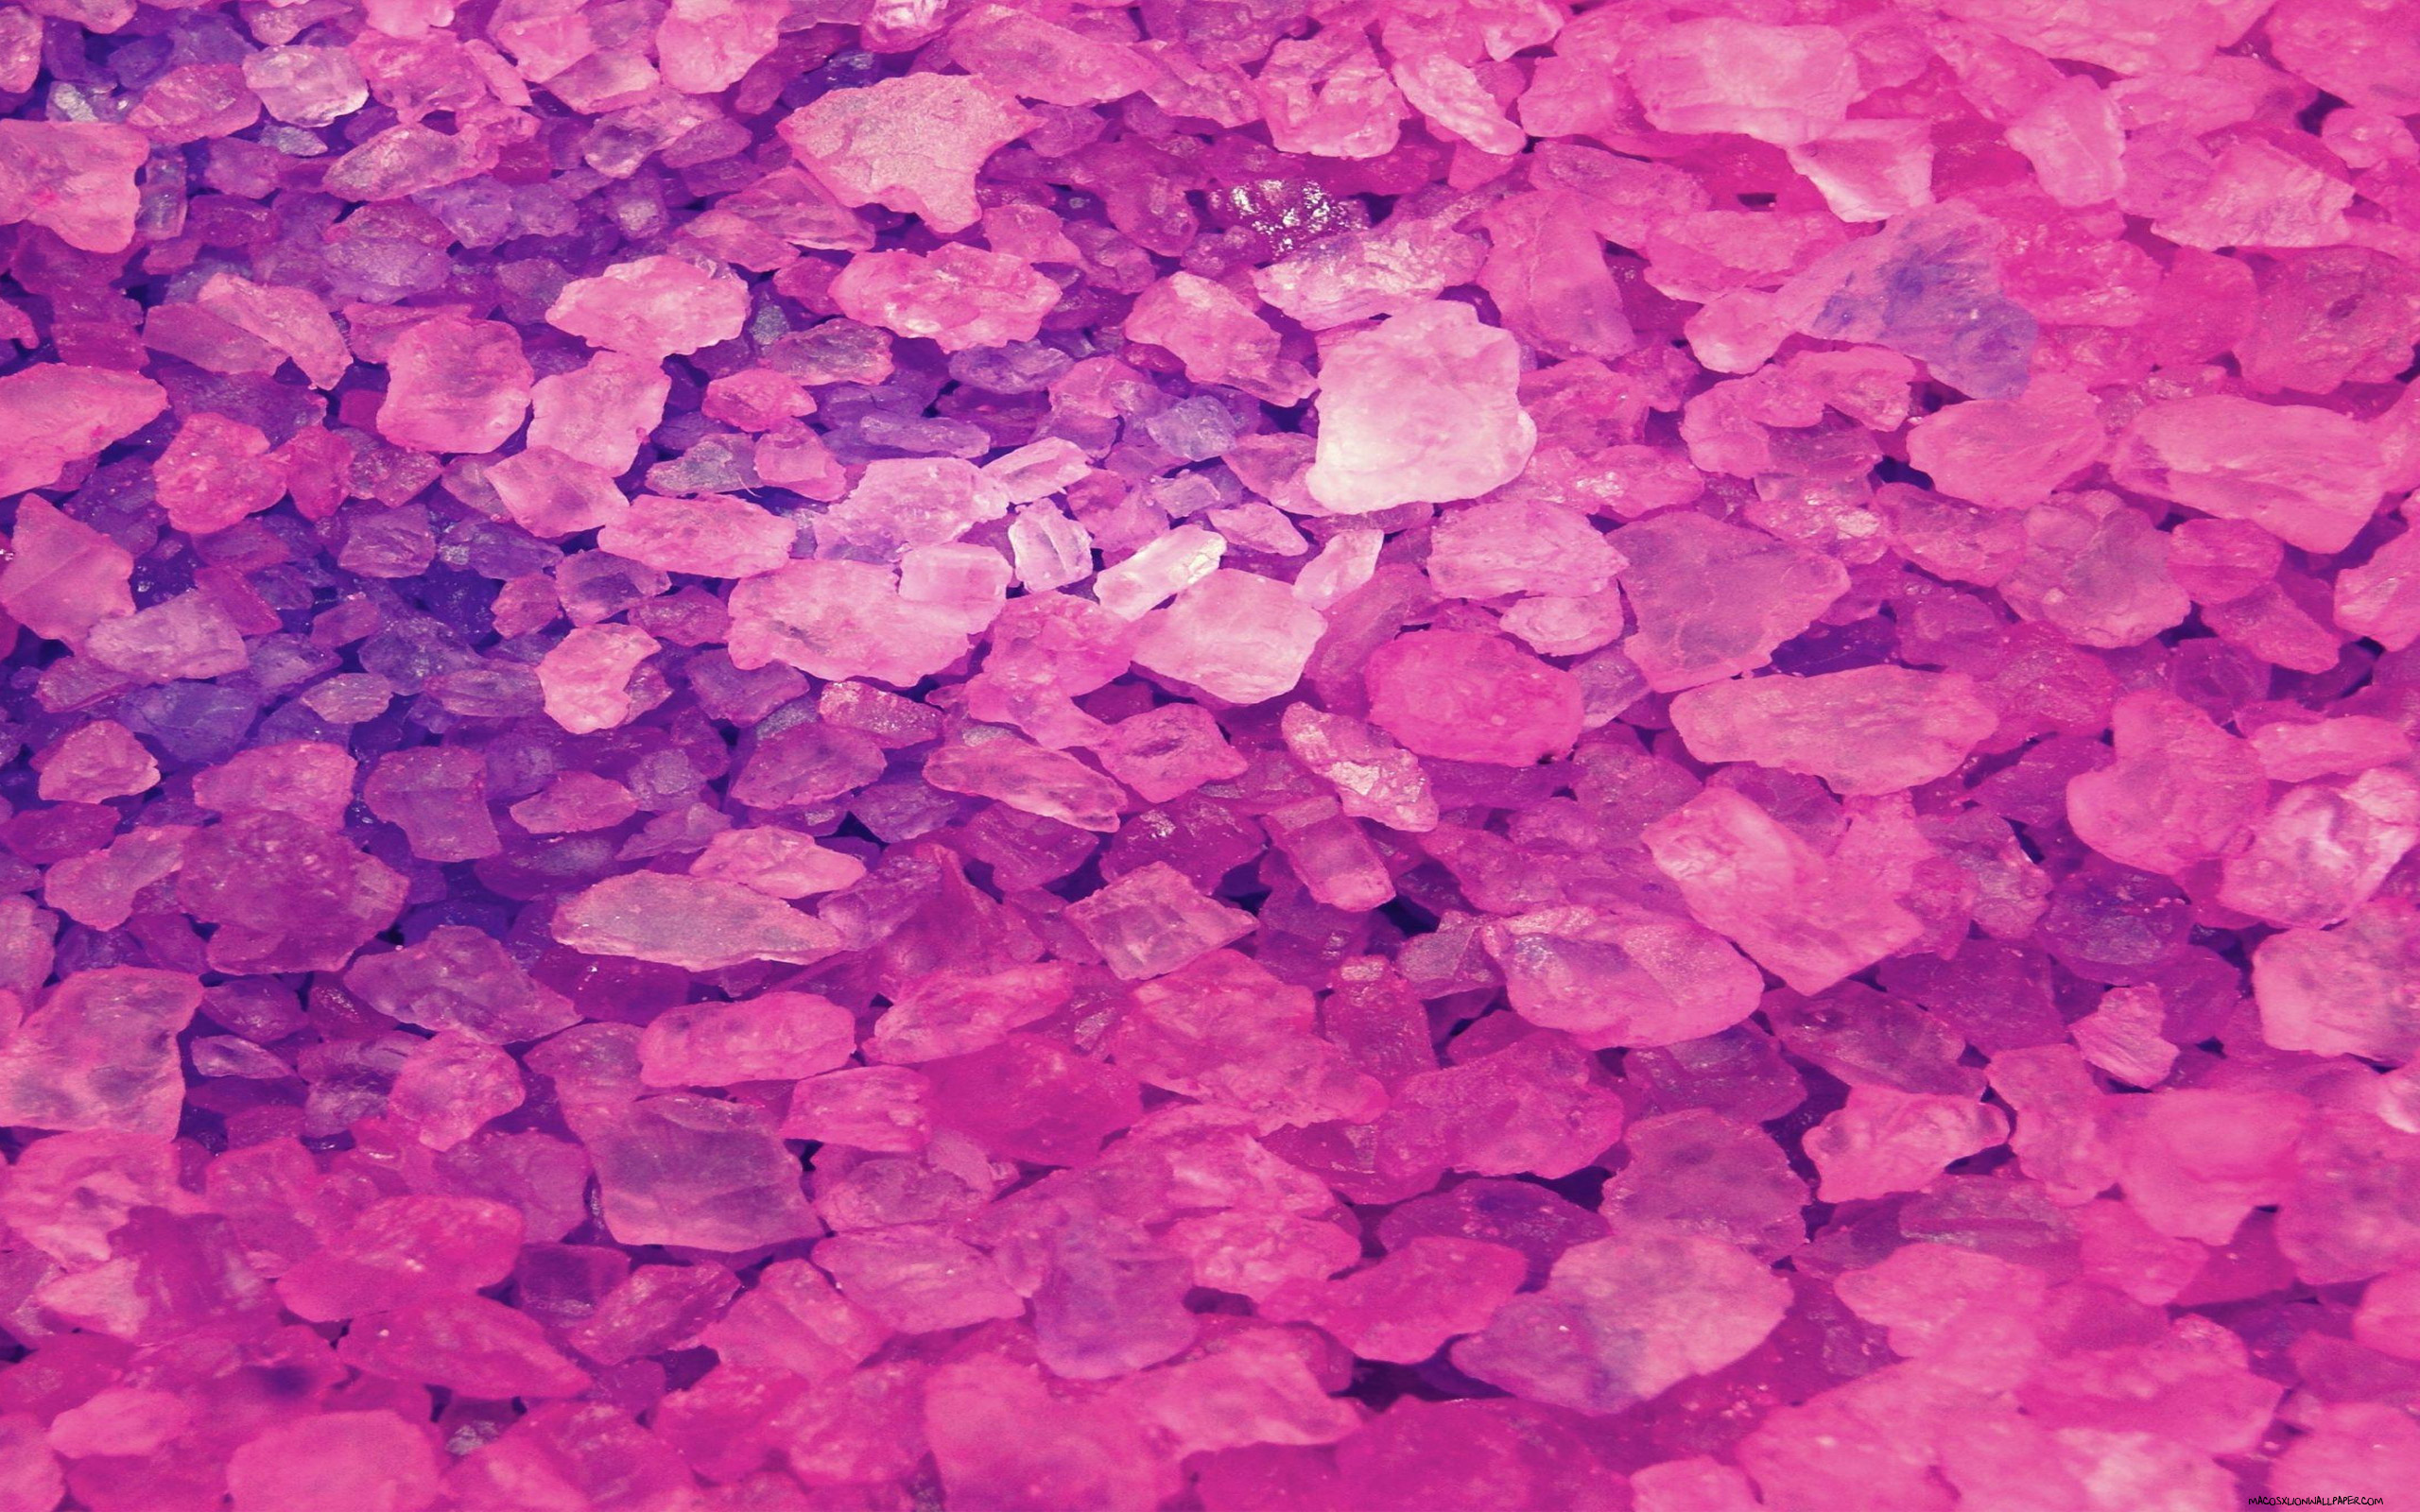 Pink Stones Wallpaper Background Mac Os X Lion